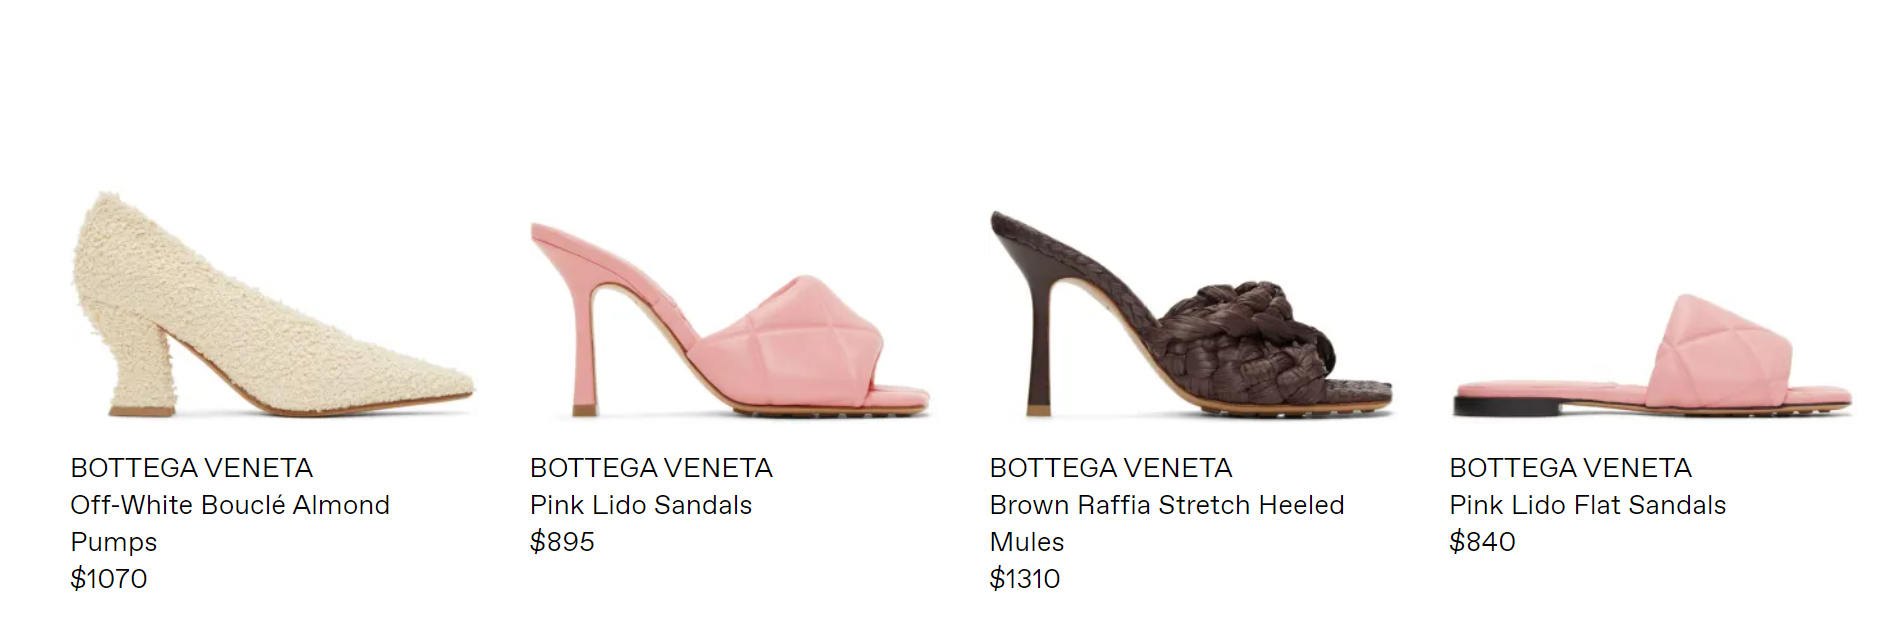 Bottega Veneta精致实用!经典包直降$850